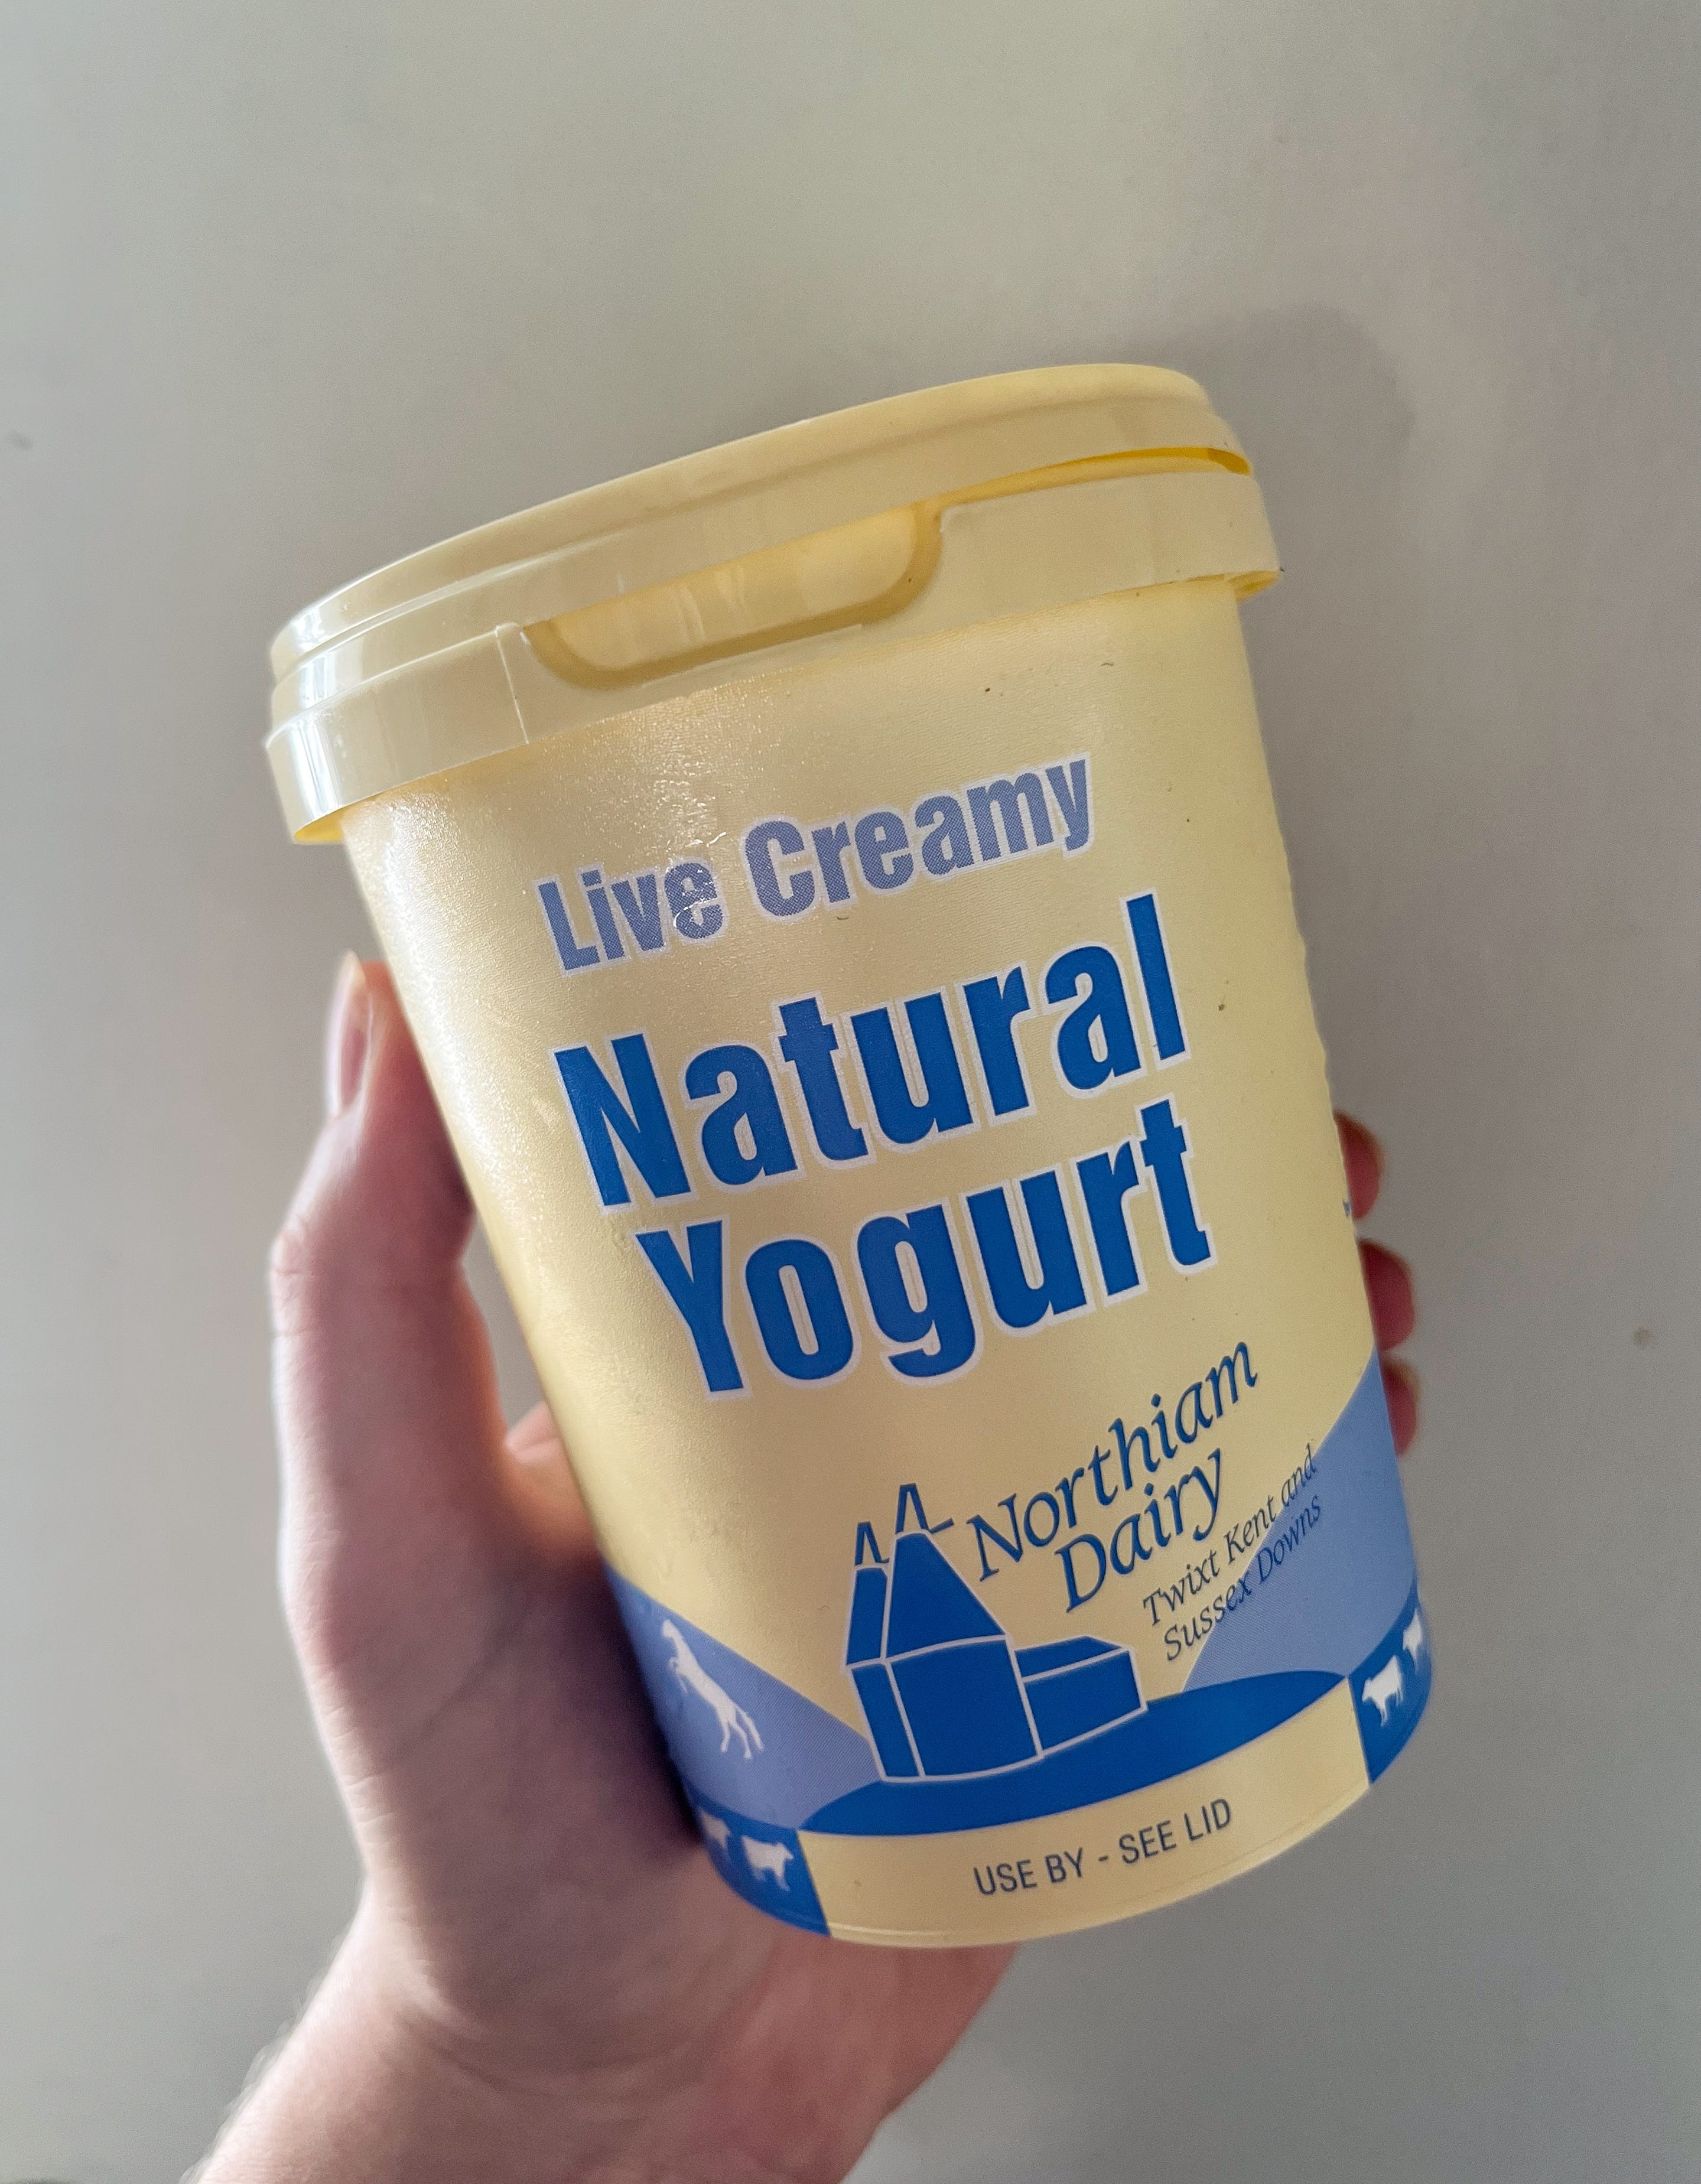 Yogurt Natural - undefined